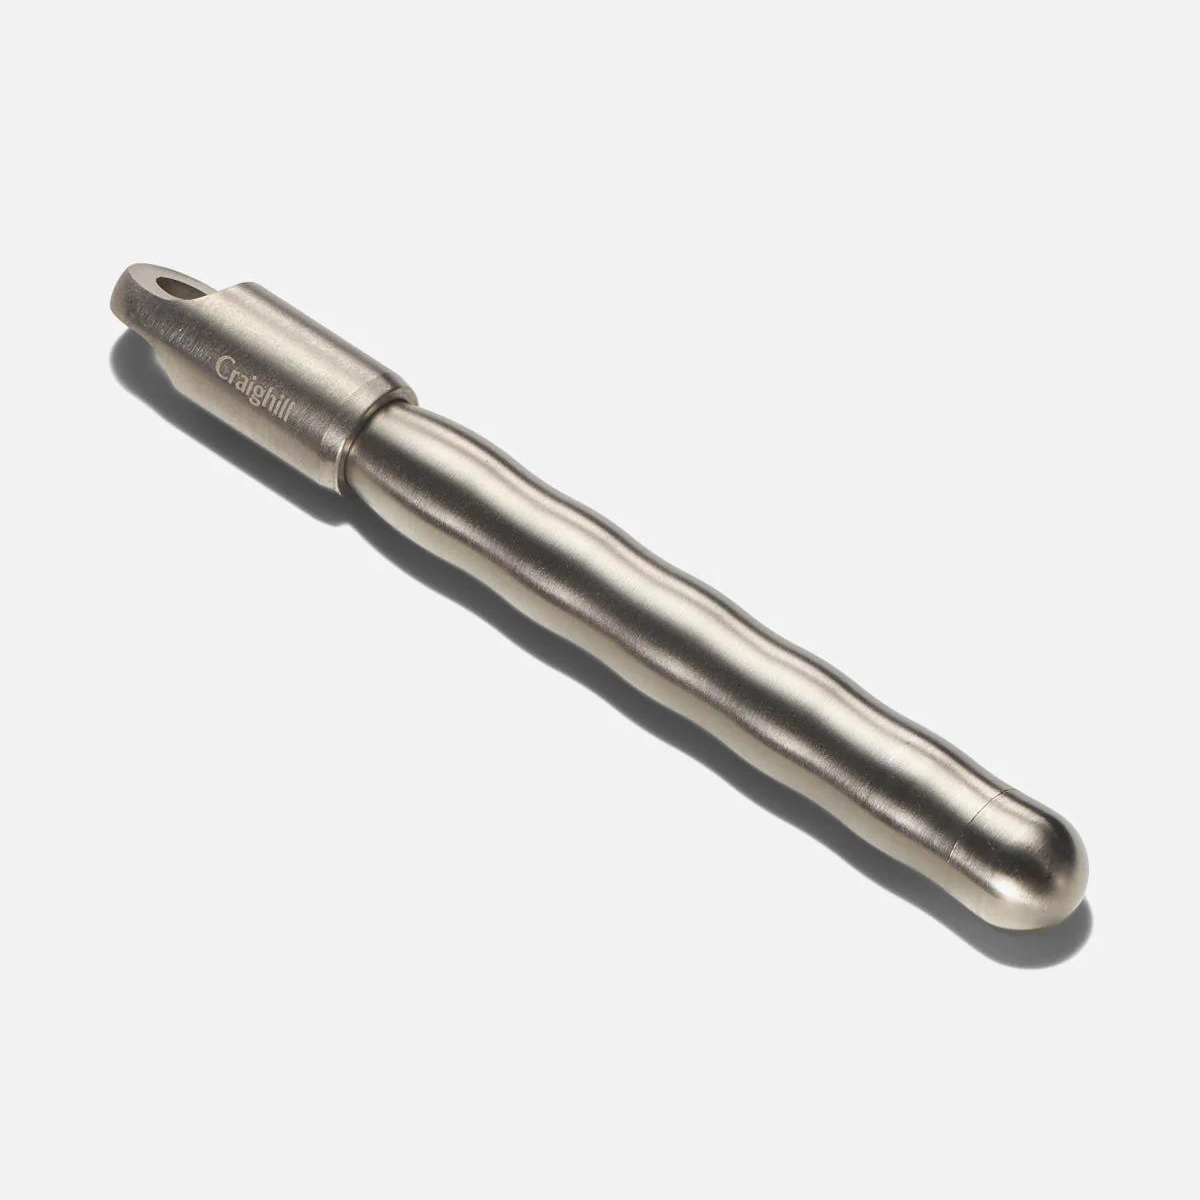 Caro Pen in Stainless Steel